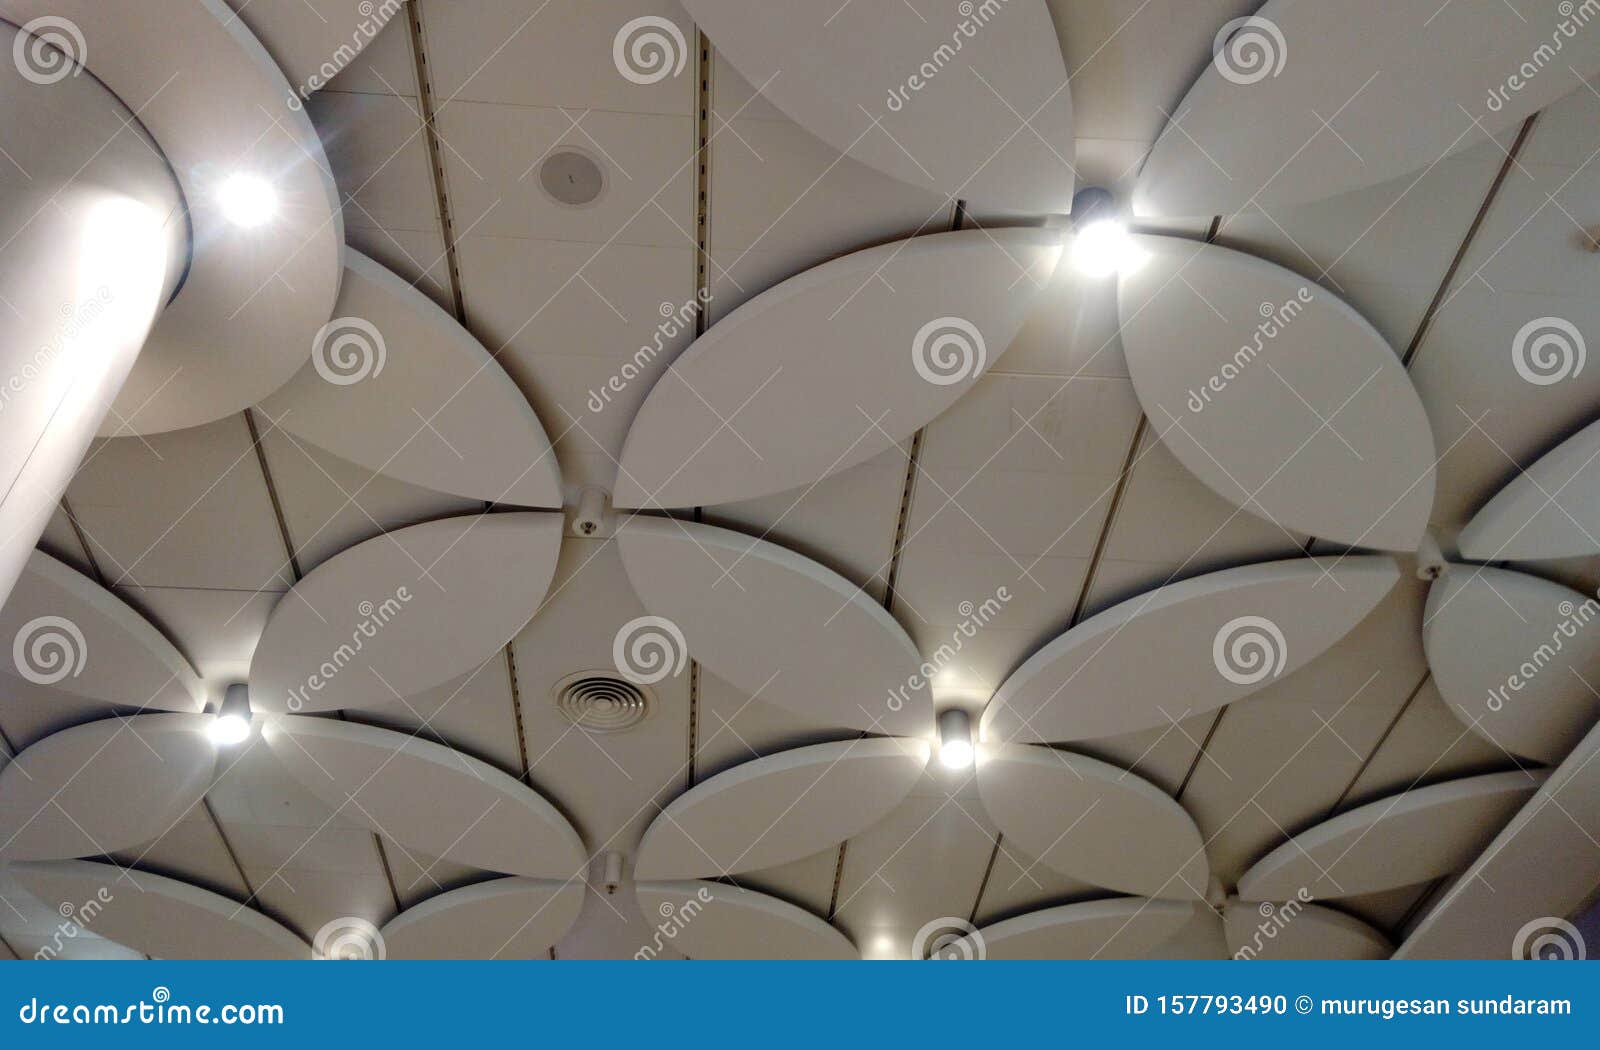 Gypsum False Ceiling With Flower Petal Design Interiors At